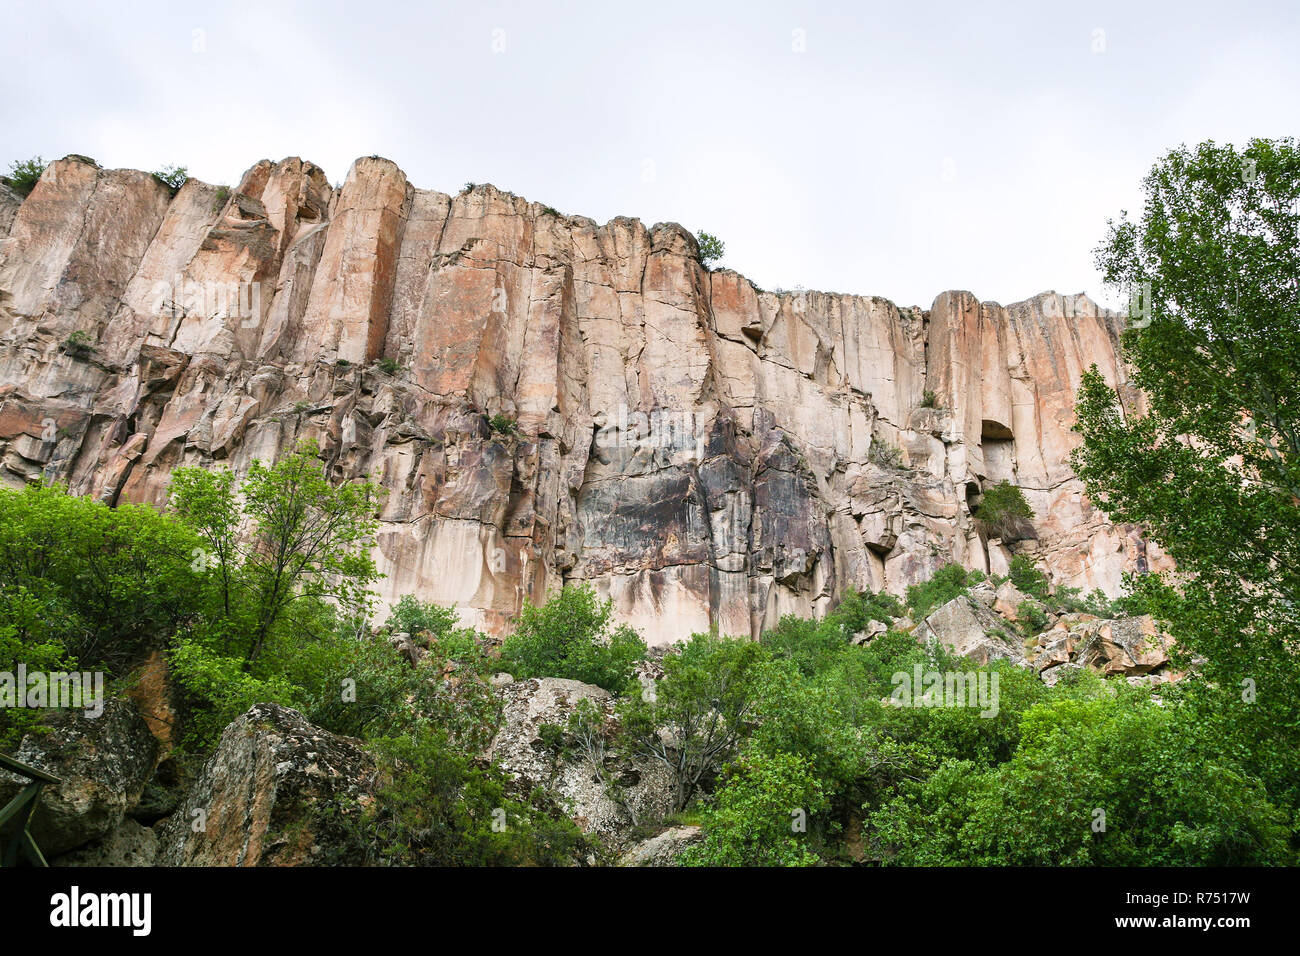 old walls of gorge of Ihlara Valley in Cappadocia Stock Photo